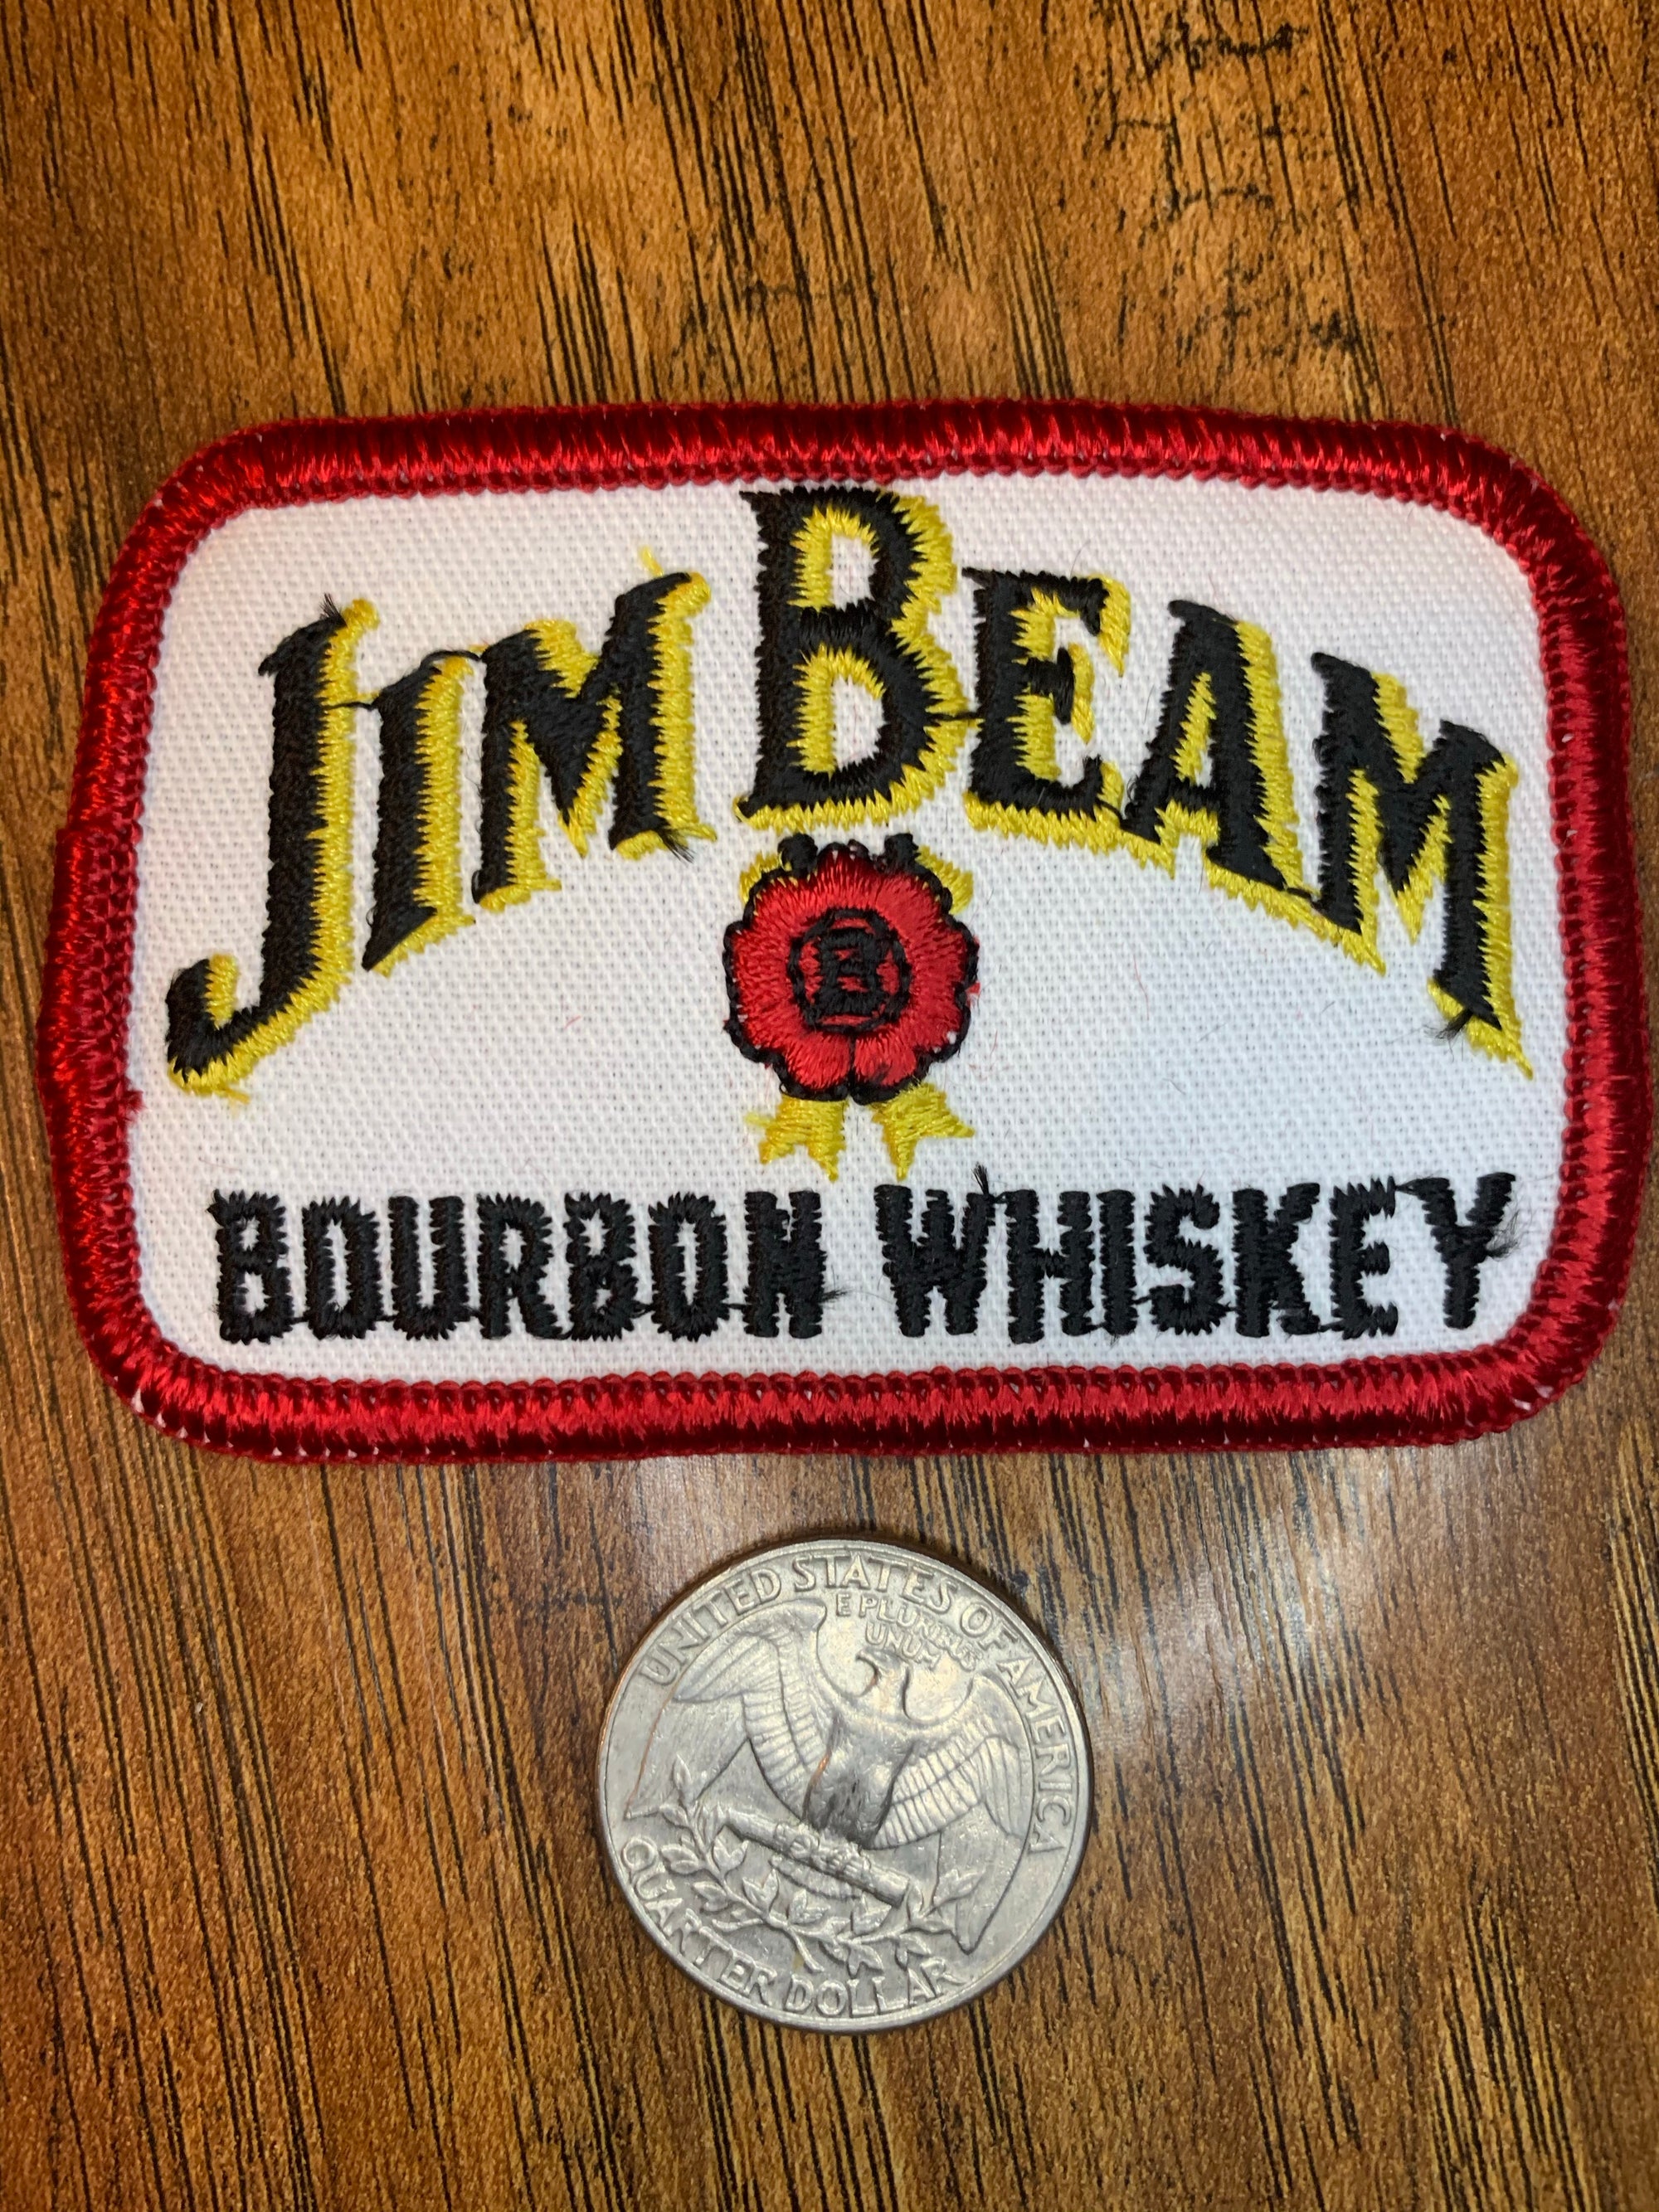 Vintage Jim Bean Bourbon Whiskey